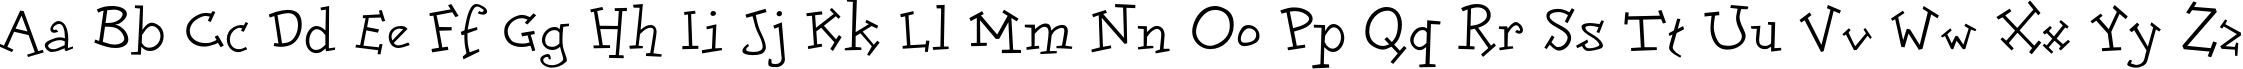 Пример написания английского алфавита шрифтом DoloresCyr